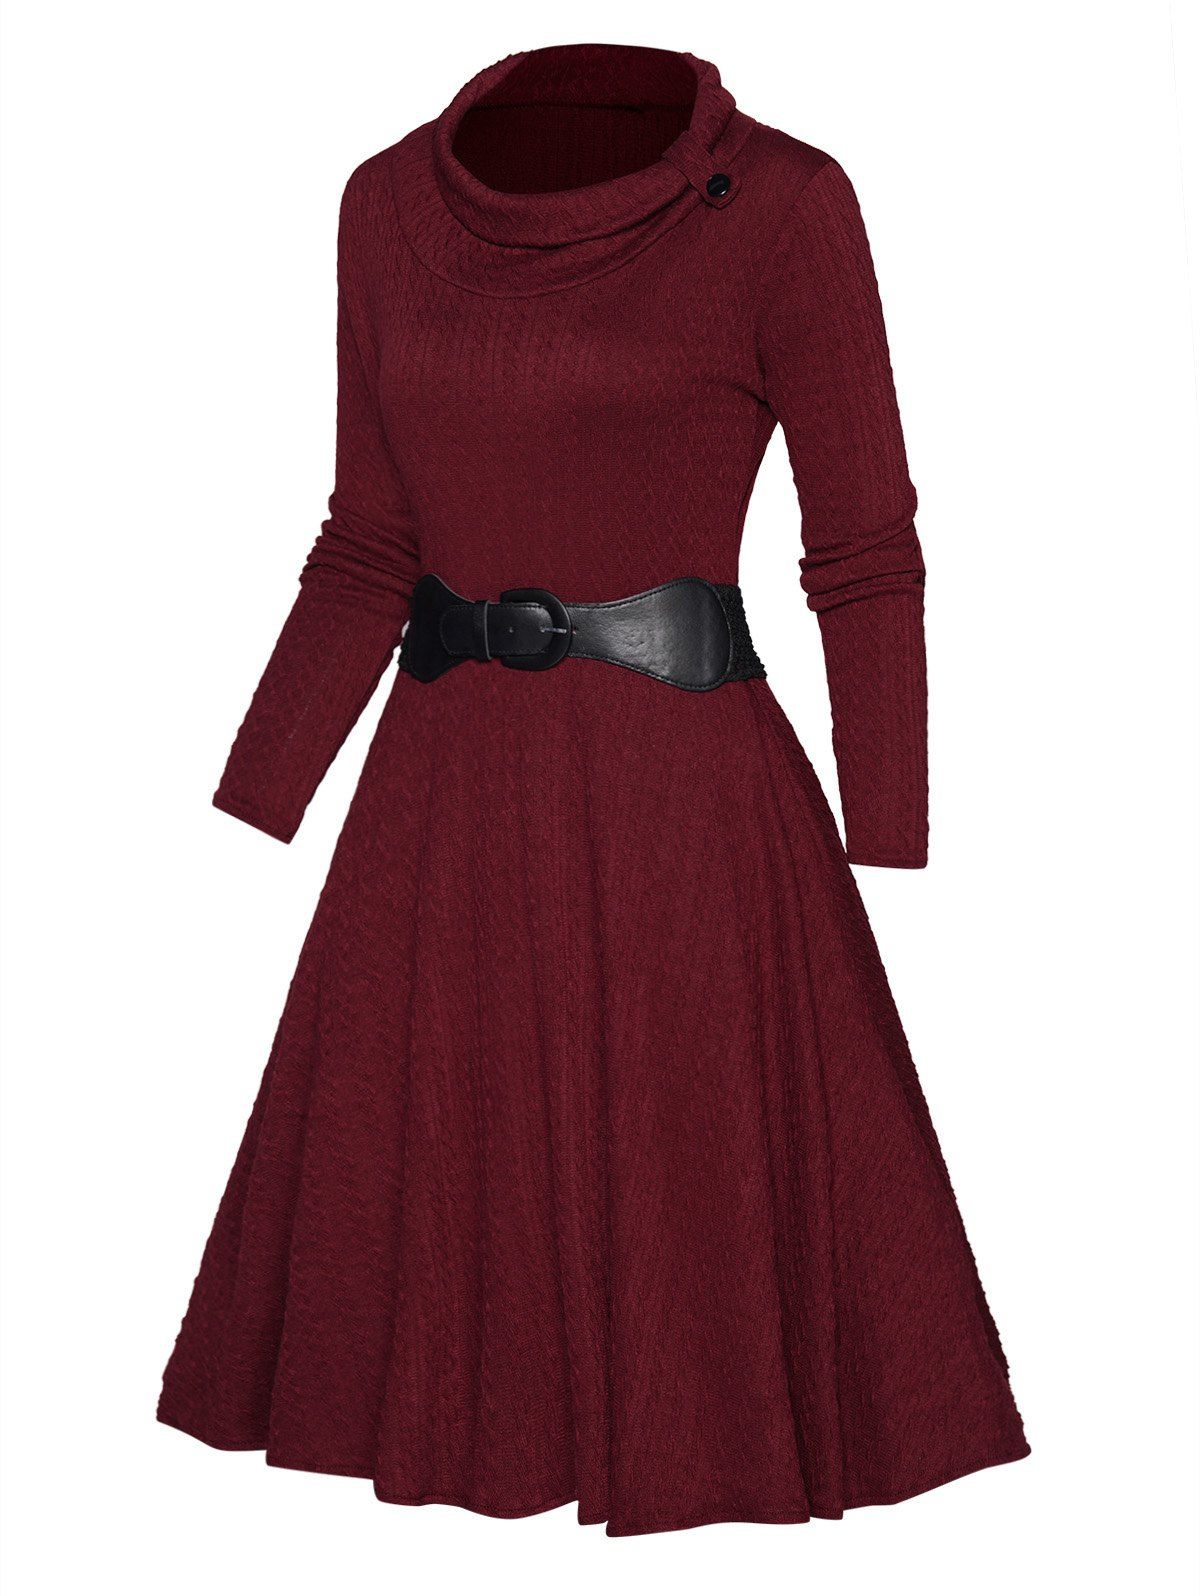 Plain Color Textured Dress High Neck Belted High Waisted Long Sleeve A Line Mini Dress - DEEP RED 2XL